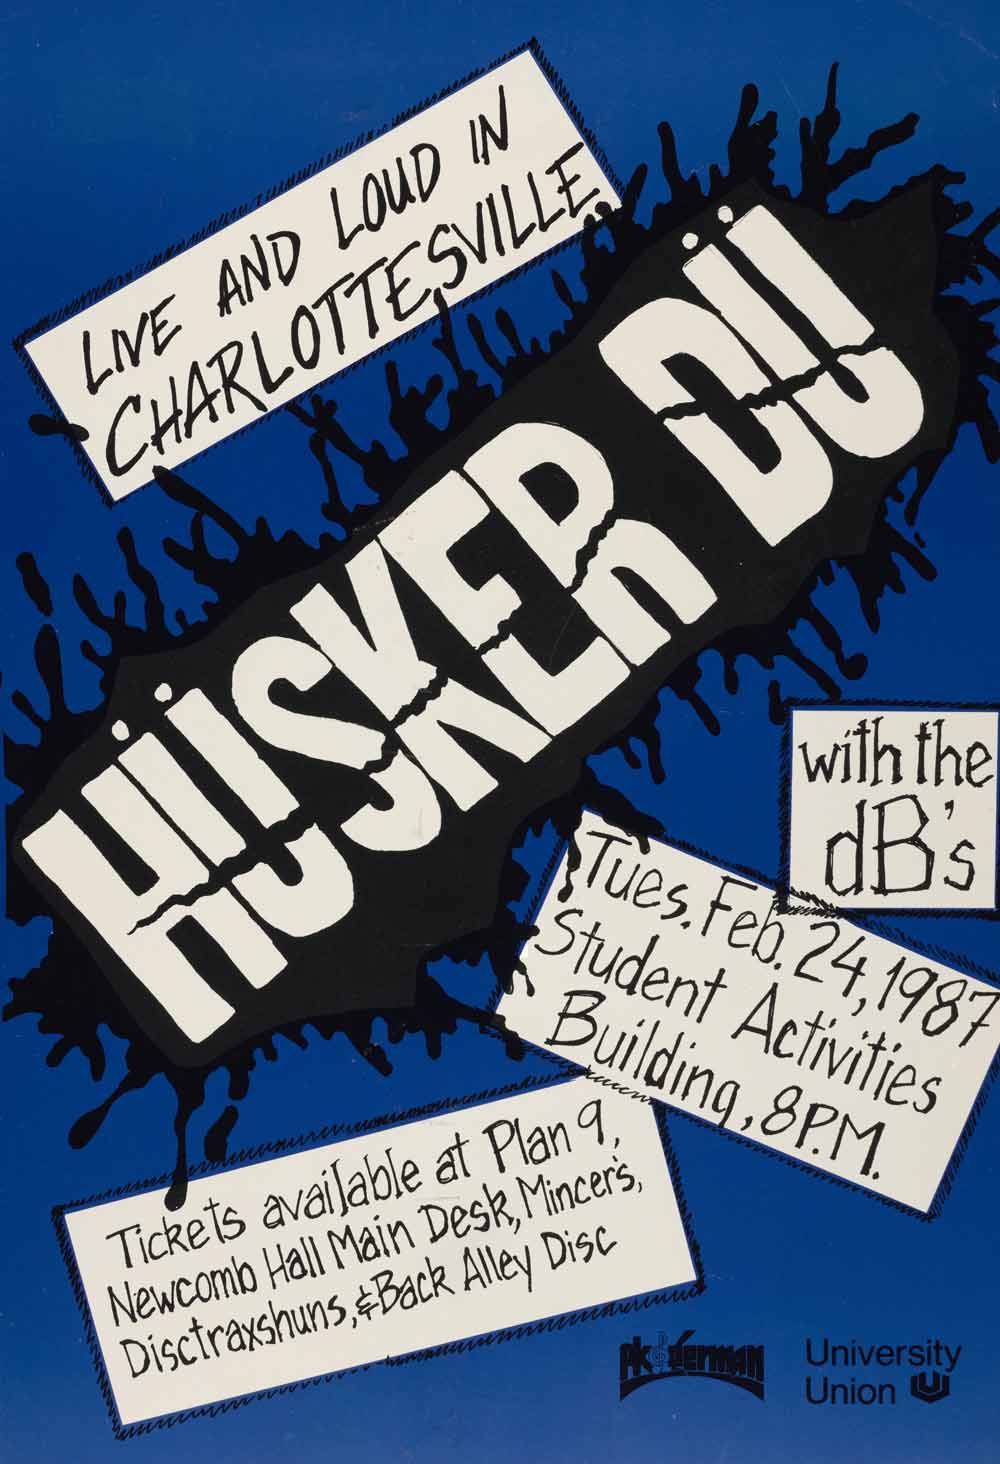 Homemade concert poster from when Husker Du visited UVA in the 1980s